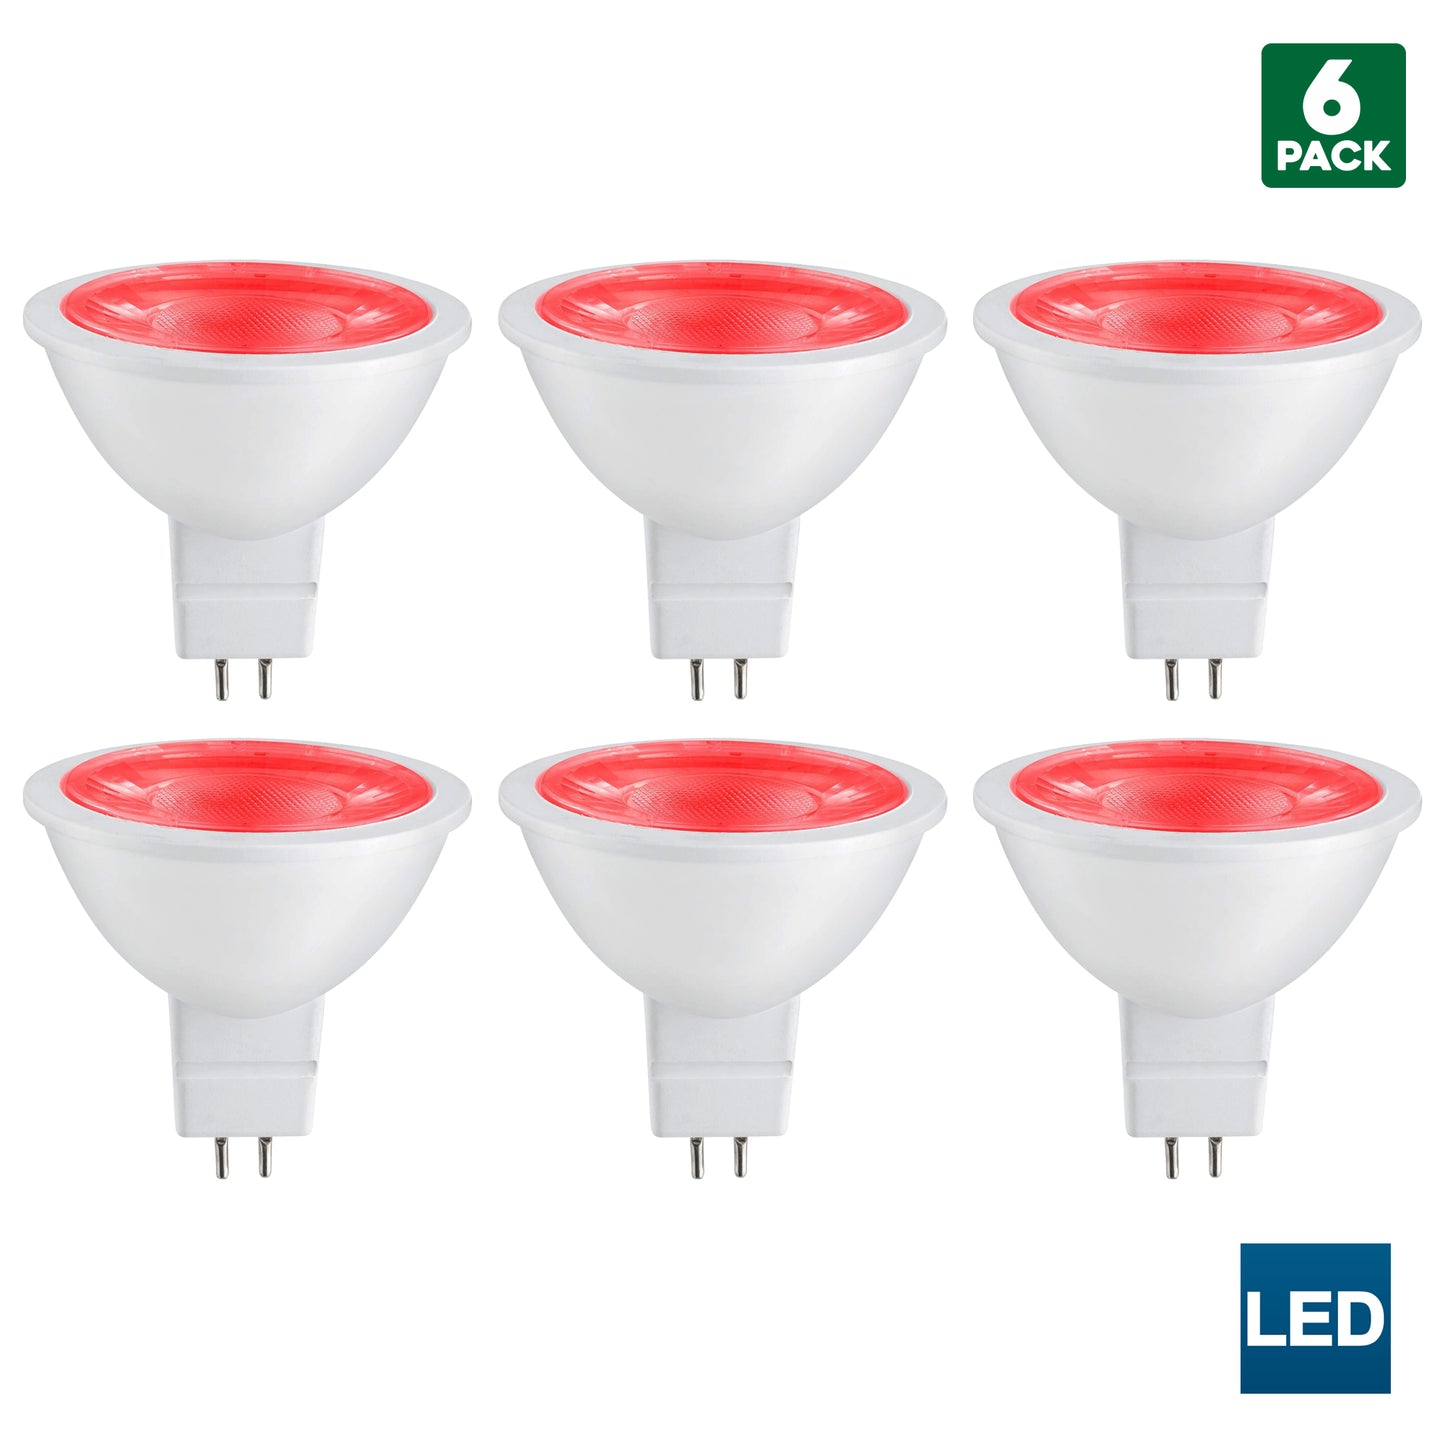 Sunlite MR16 Red LED Bulb, 12 Volt, 3 Watt, 90 Lumens, GU5.3 Base, 30,000 Hour Long Life, 25W Equivalent, Energy Saving, Cool Touch